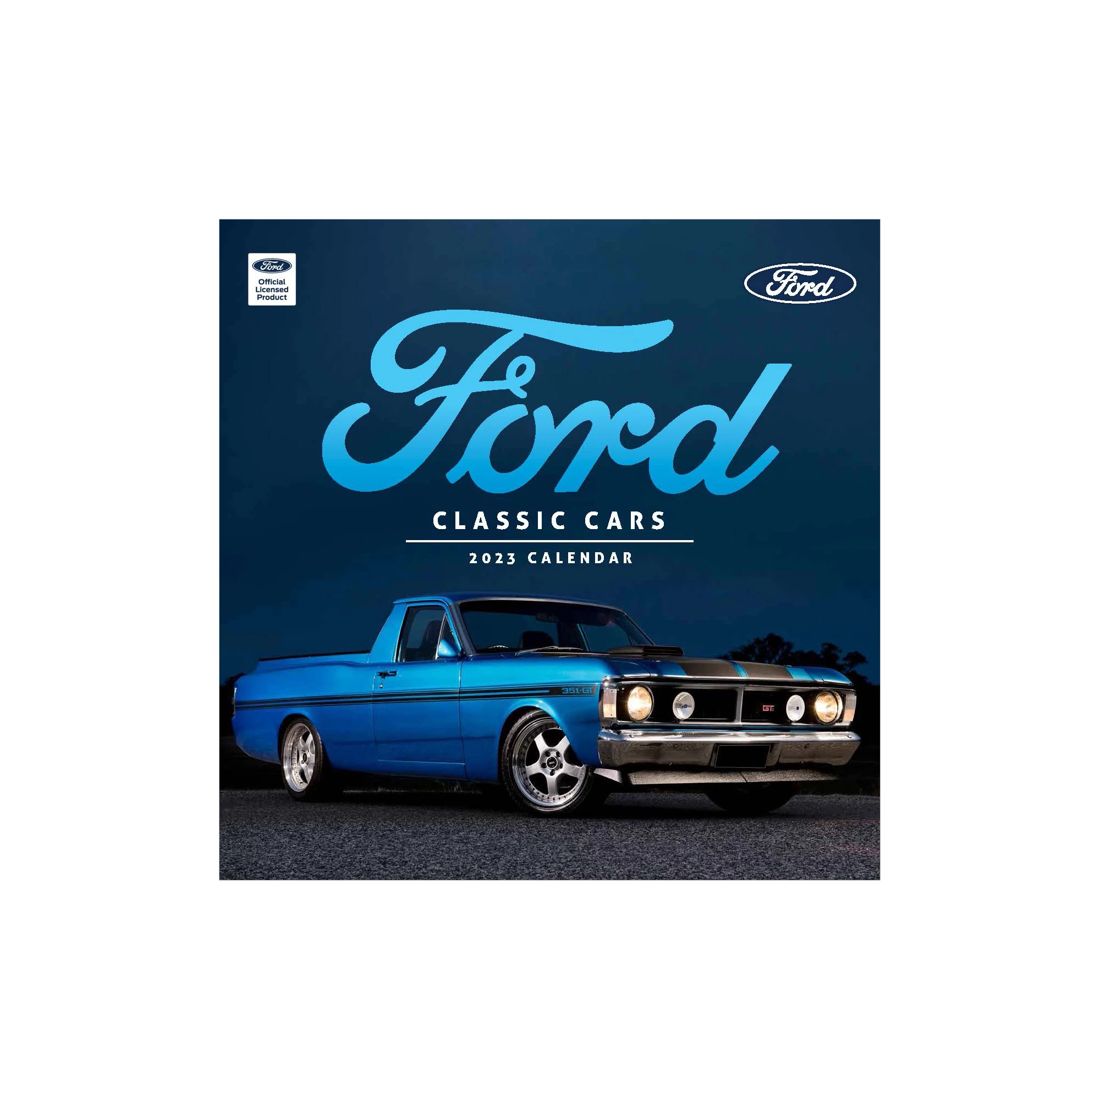 Classic Ford Cars 2023 Square Calendar Target Australia